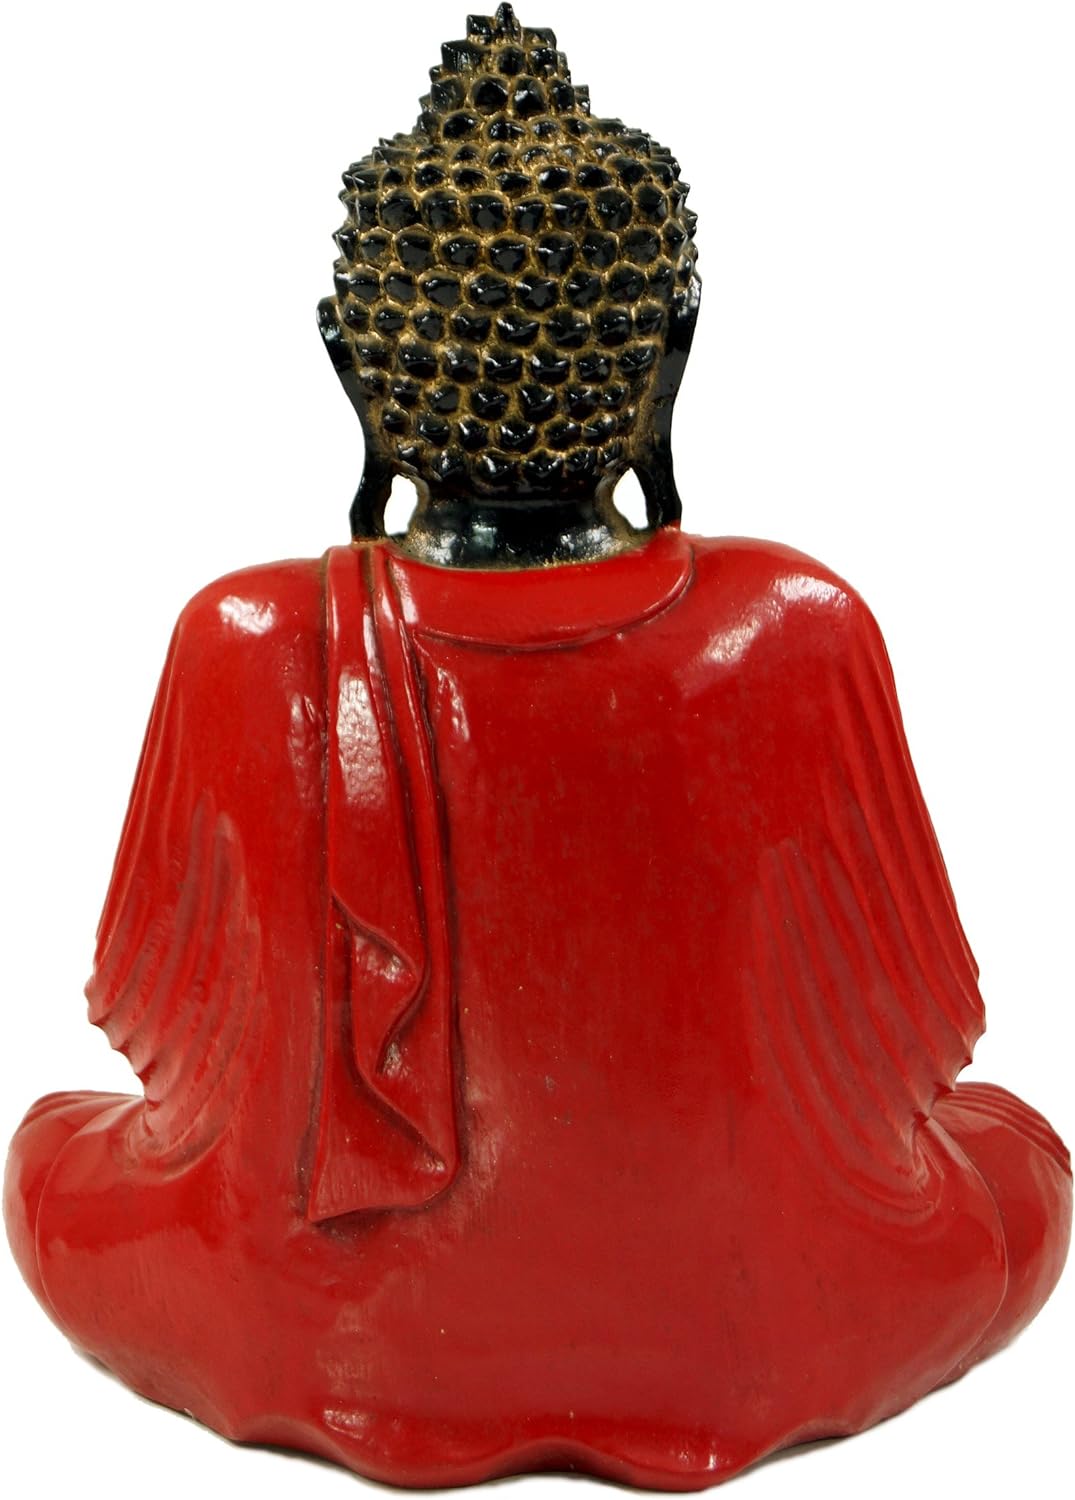 GURU SHOP Carved Sitting Buddha in Anjali Mudra - Red, 30 x 25 x 13 cm, Buddha